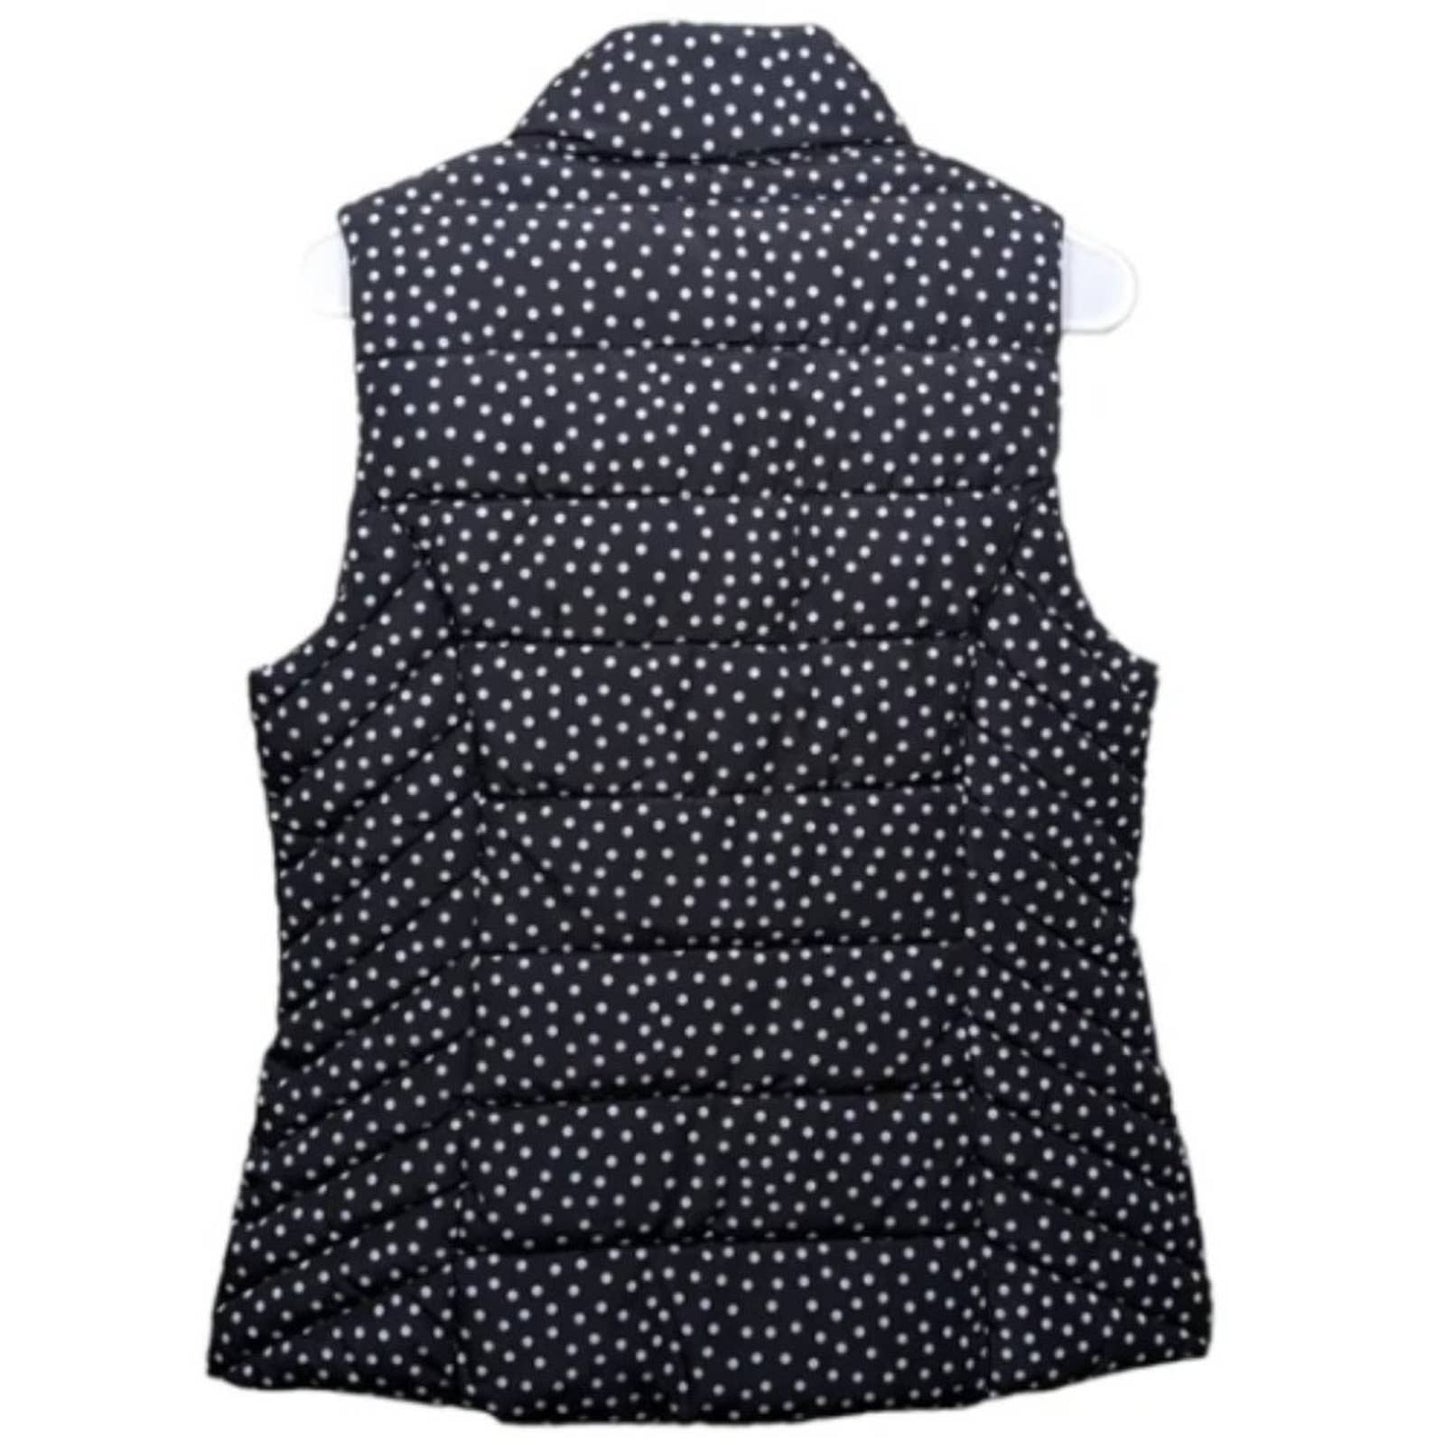 Tommy Hilfiger New York Polka Dot Puffer Vest in Black & White NWT Size XL